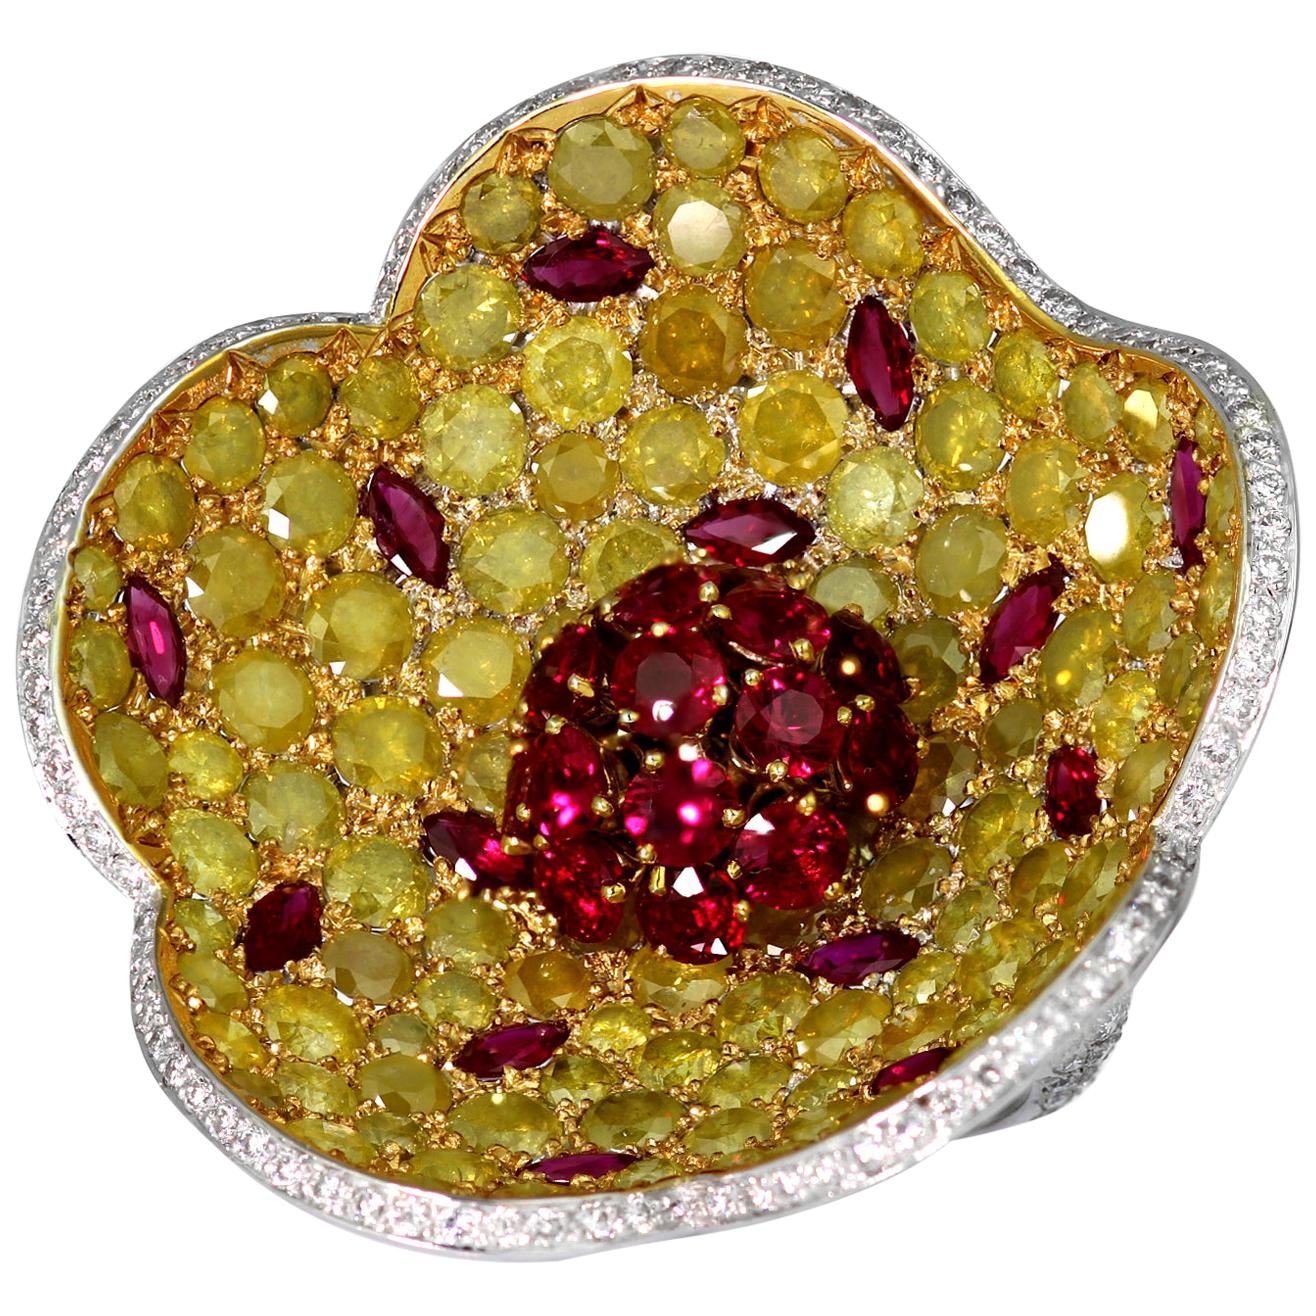 Brilliant Cut Designer De Grisogono Big Floral Cocktail Ring with Ruby, Yellow & White Diamond